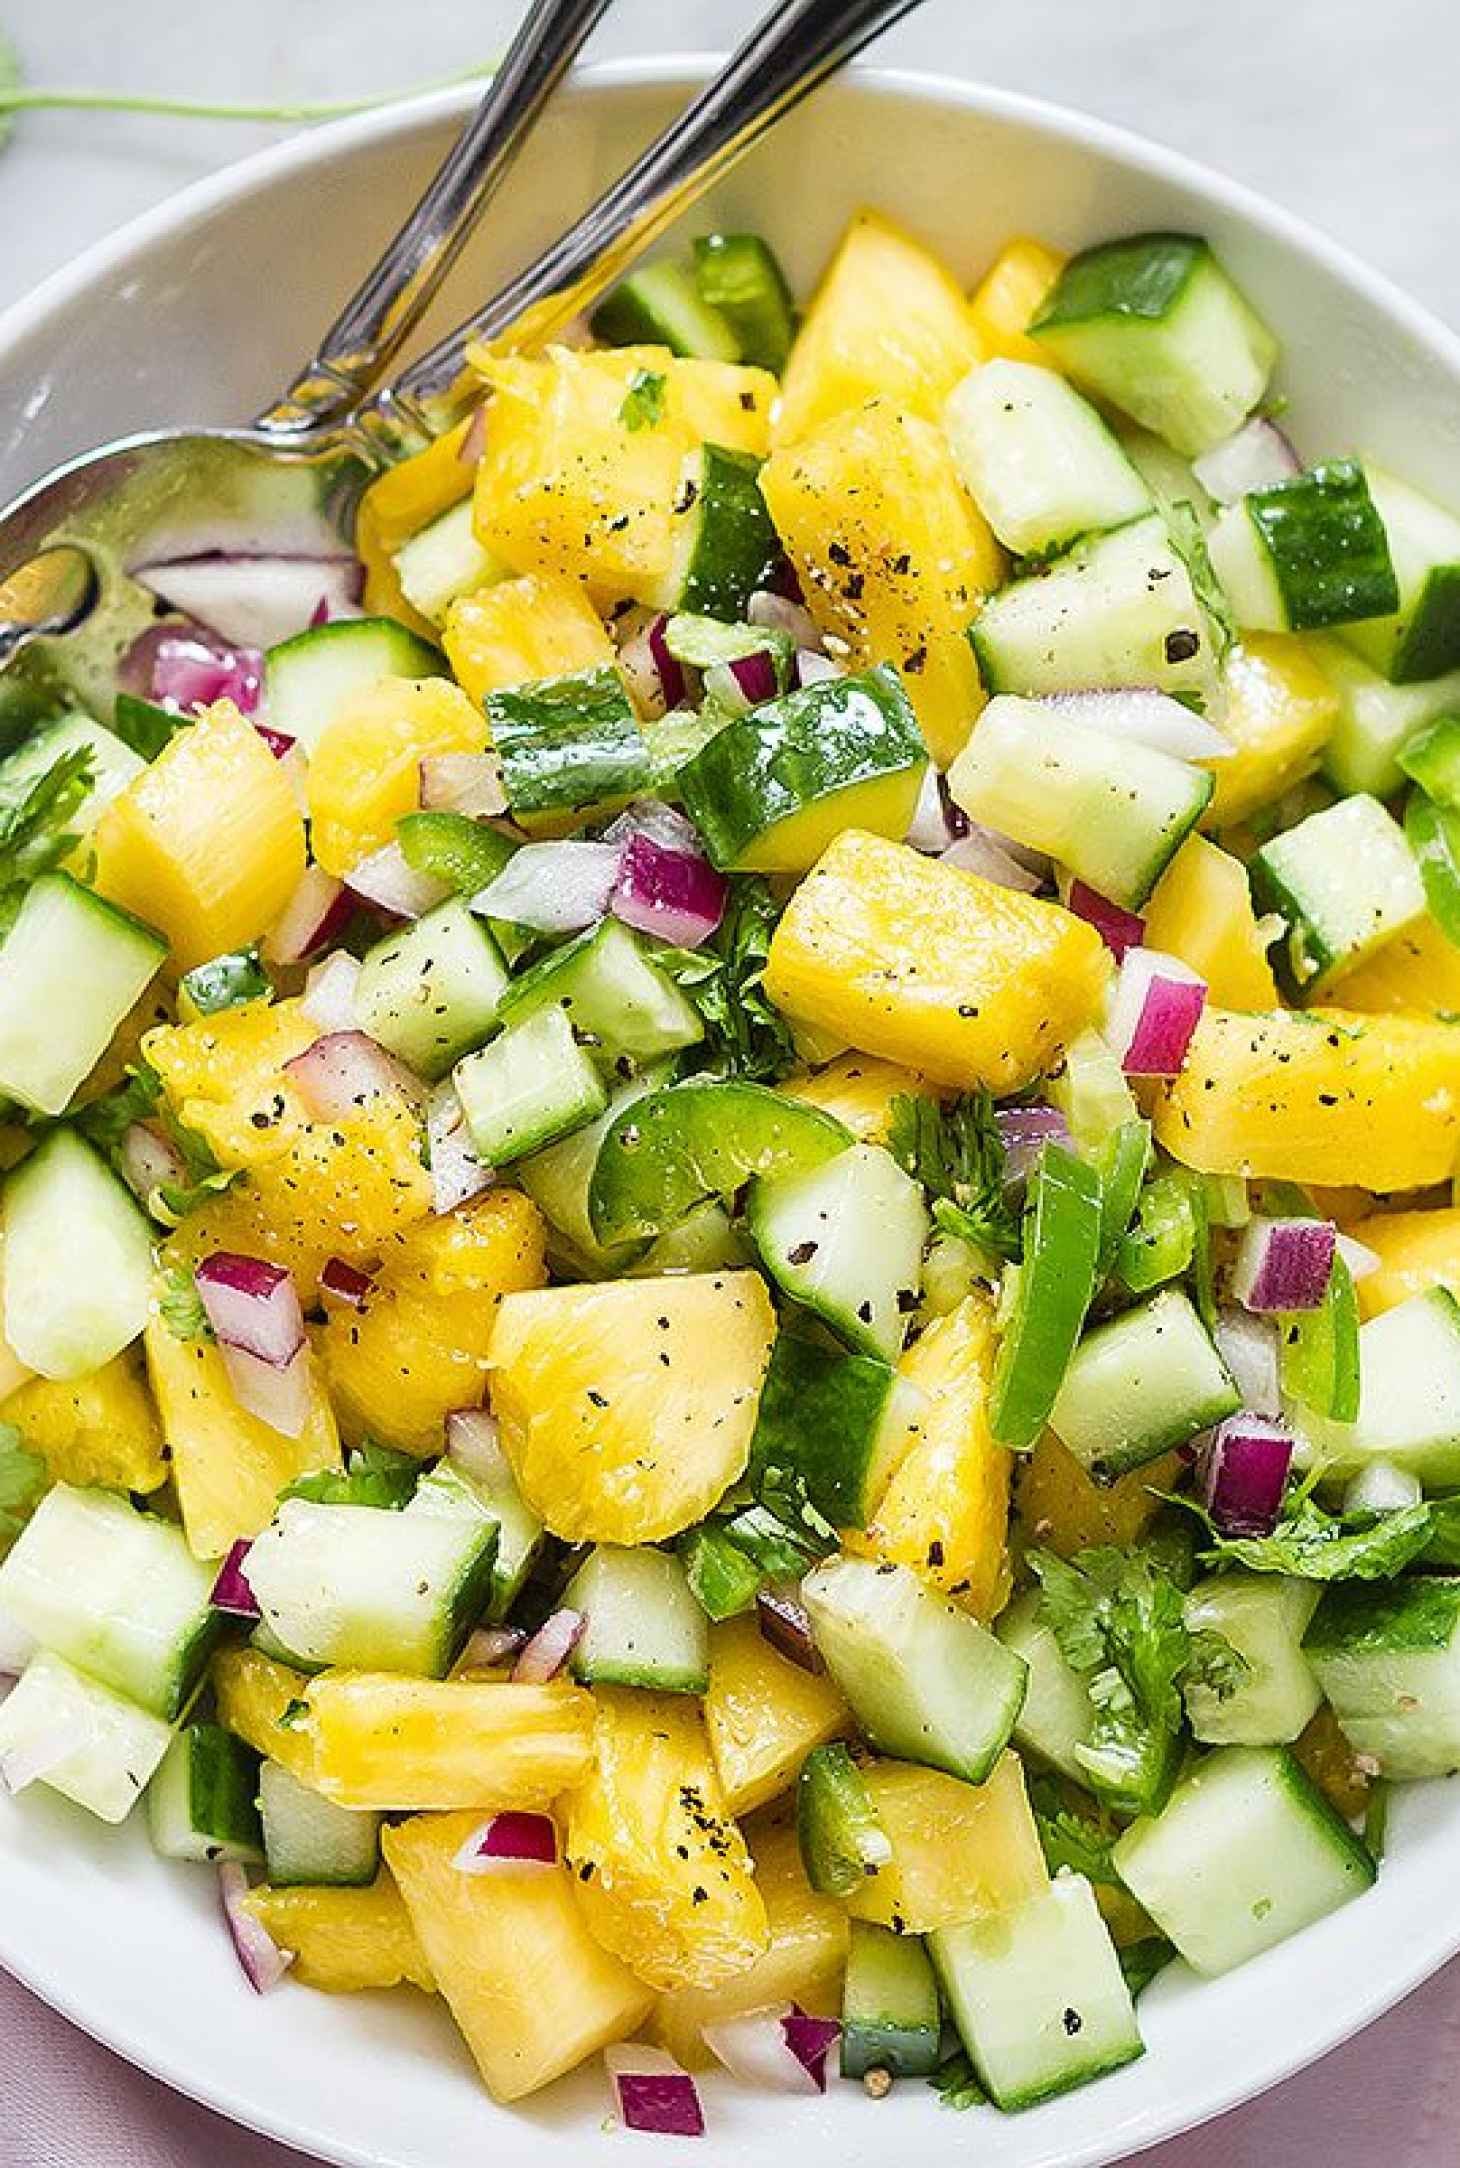 Pineapple Cucumber Jalapeño Salad - #recipe by #eatwell101 - https://www.eatwell101.com/pineapple-cucumber-jalapeno-salad